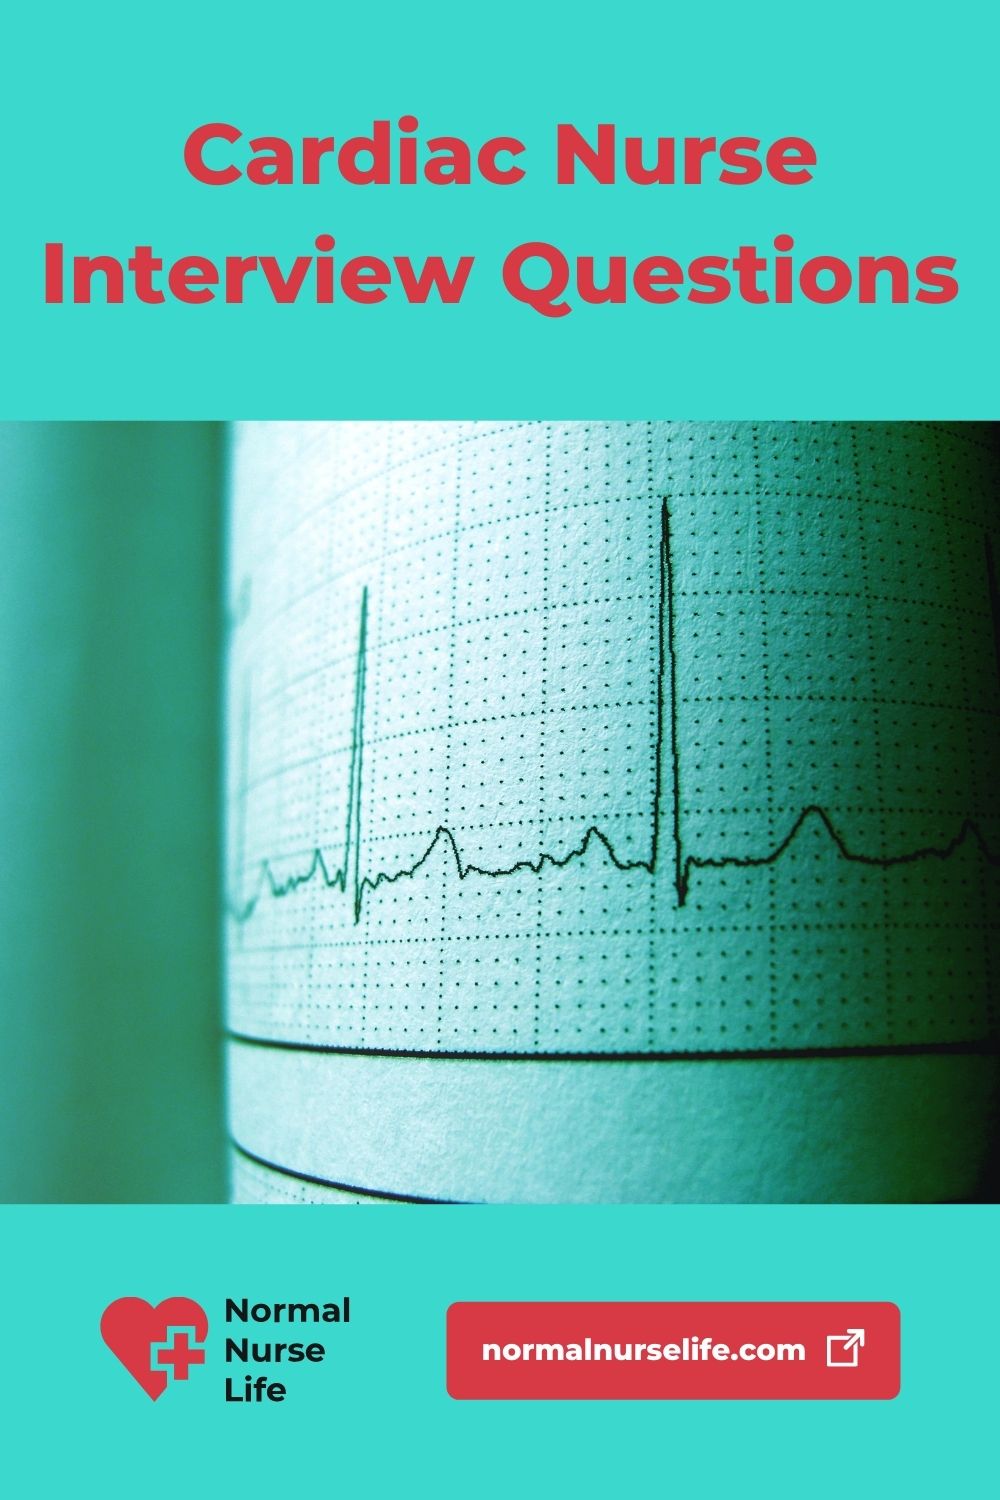 Cardiac interview questions for nurses